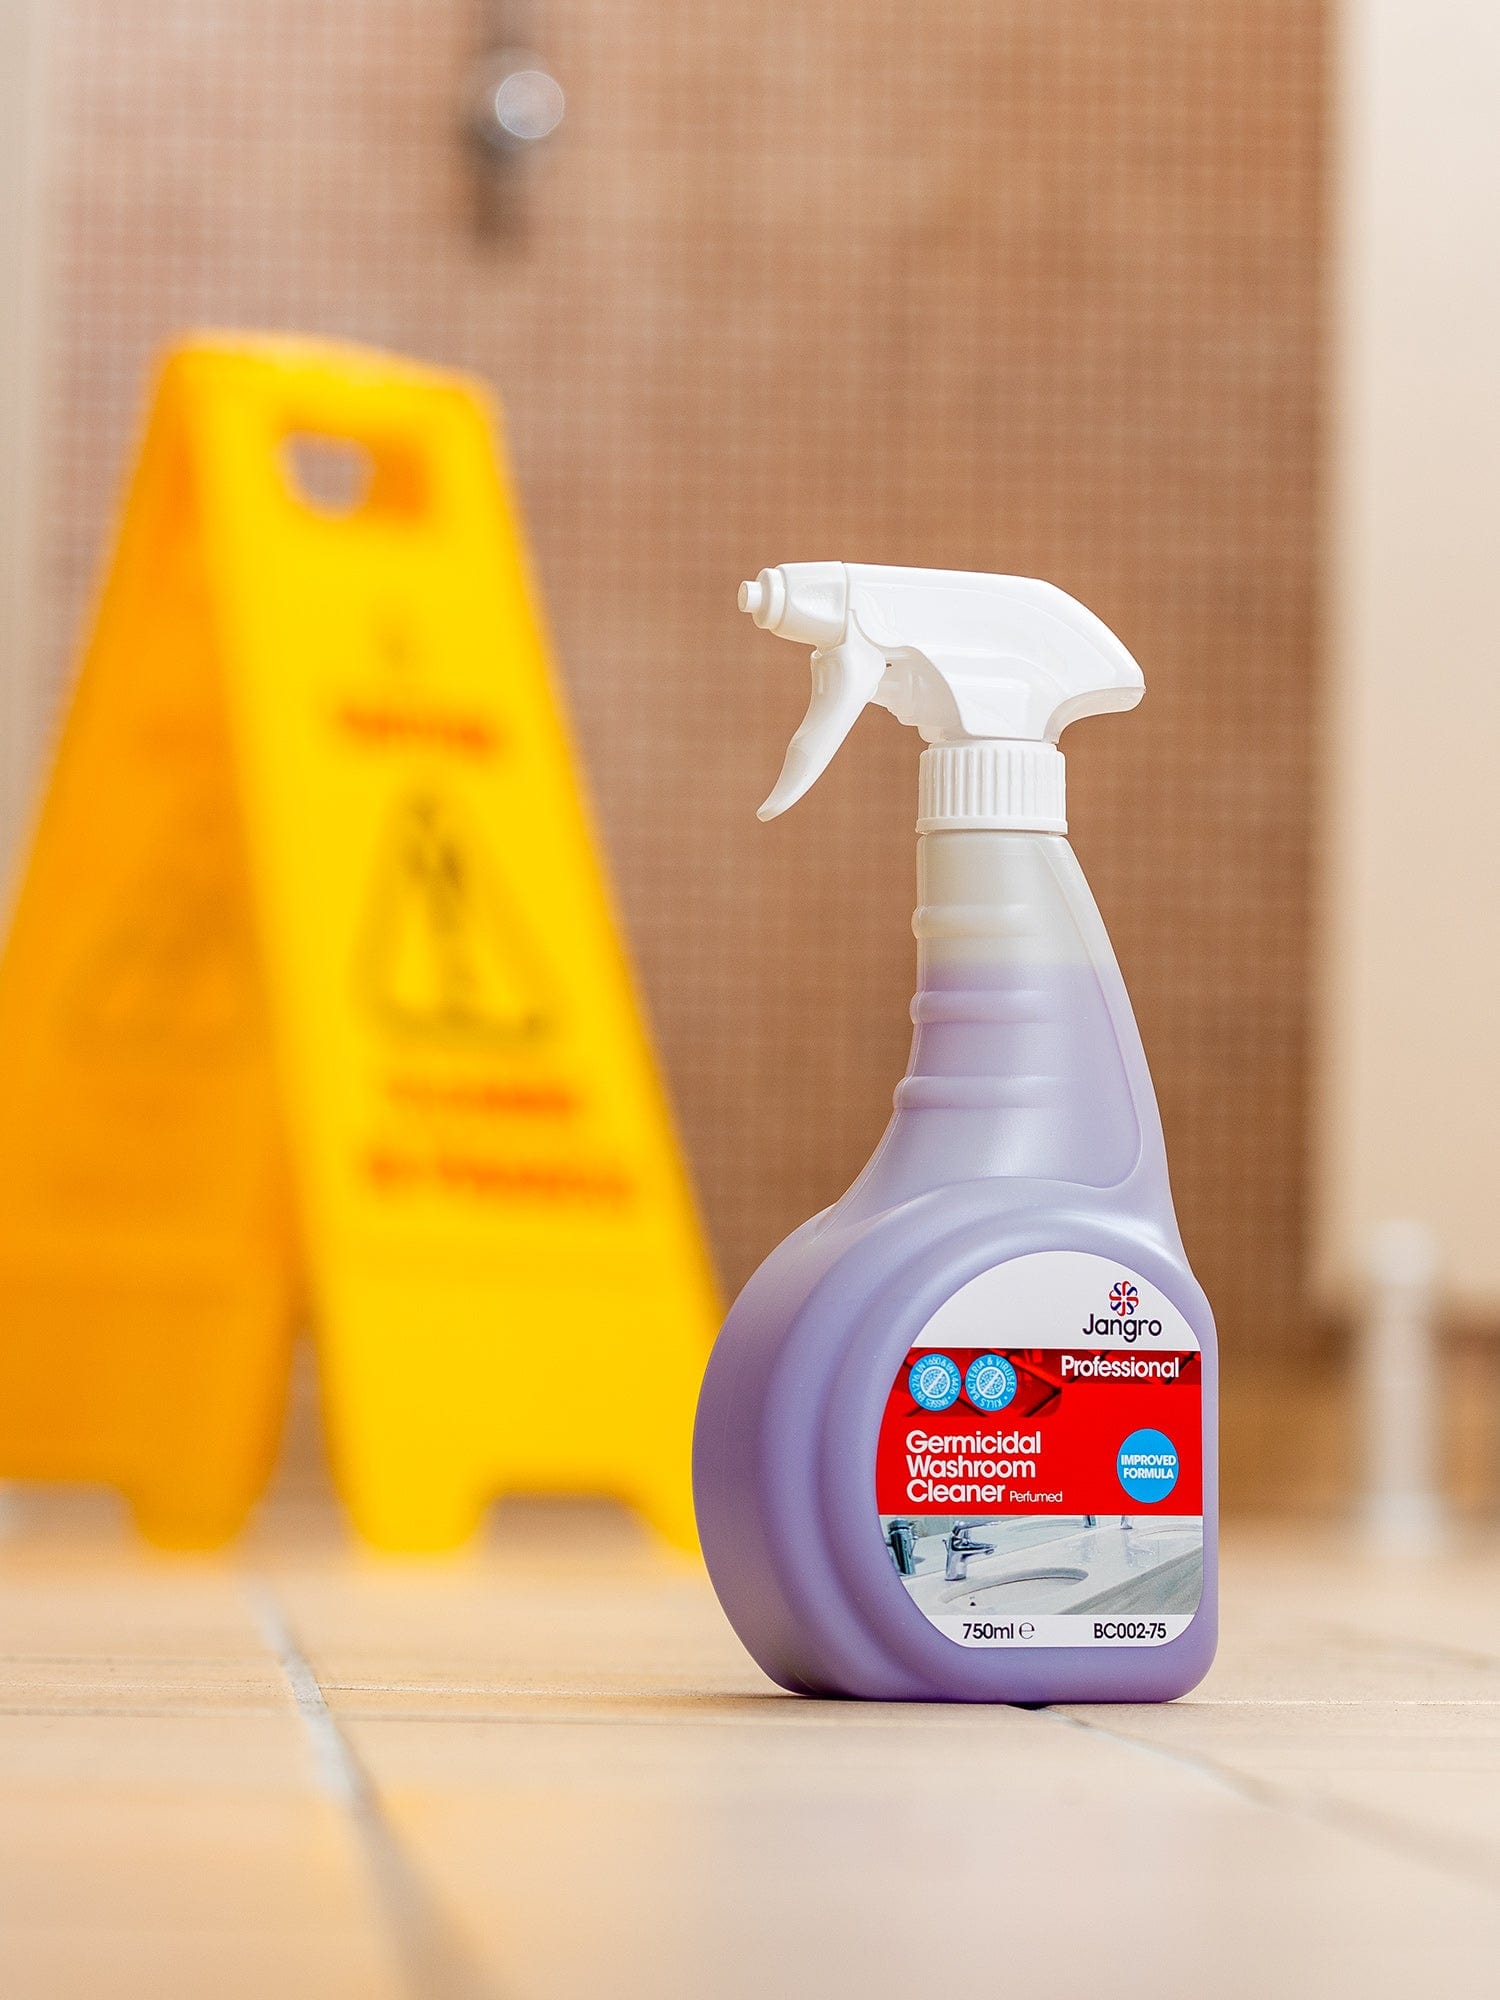 spray bottle germicidal cleaner